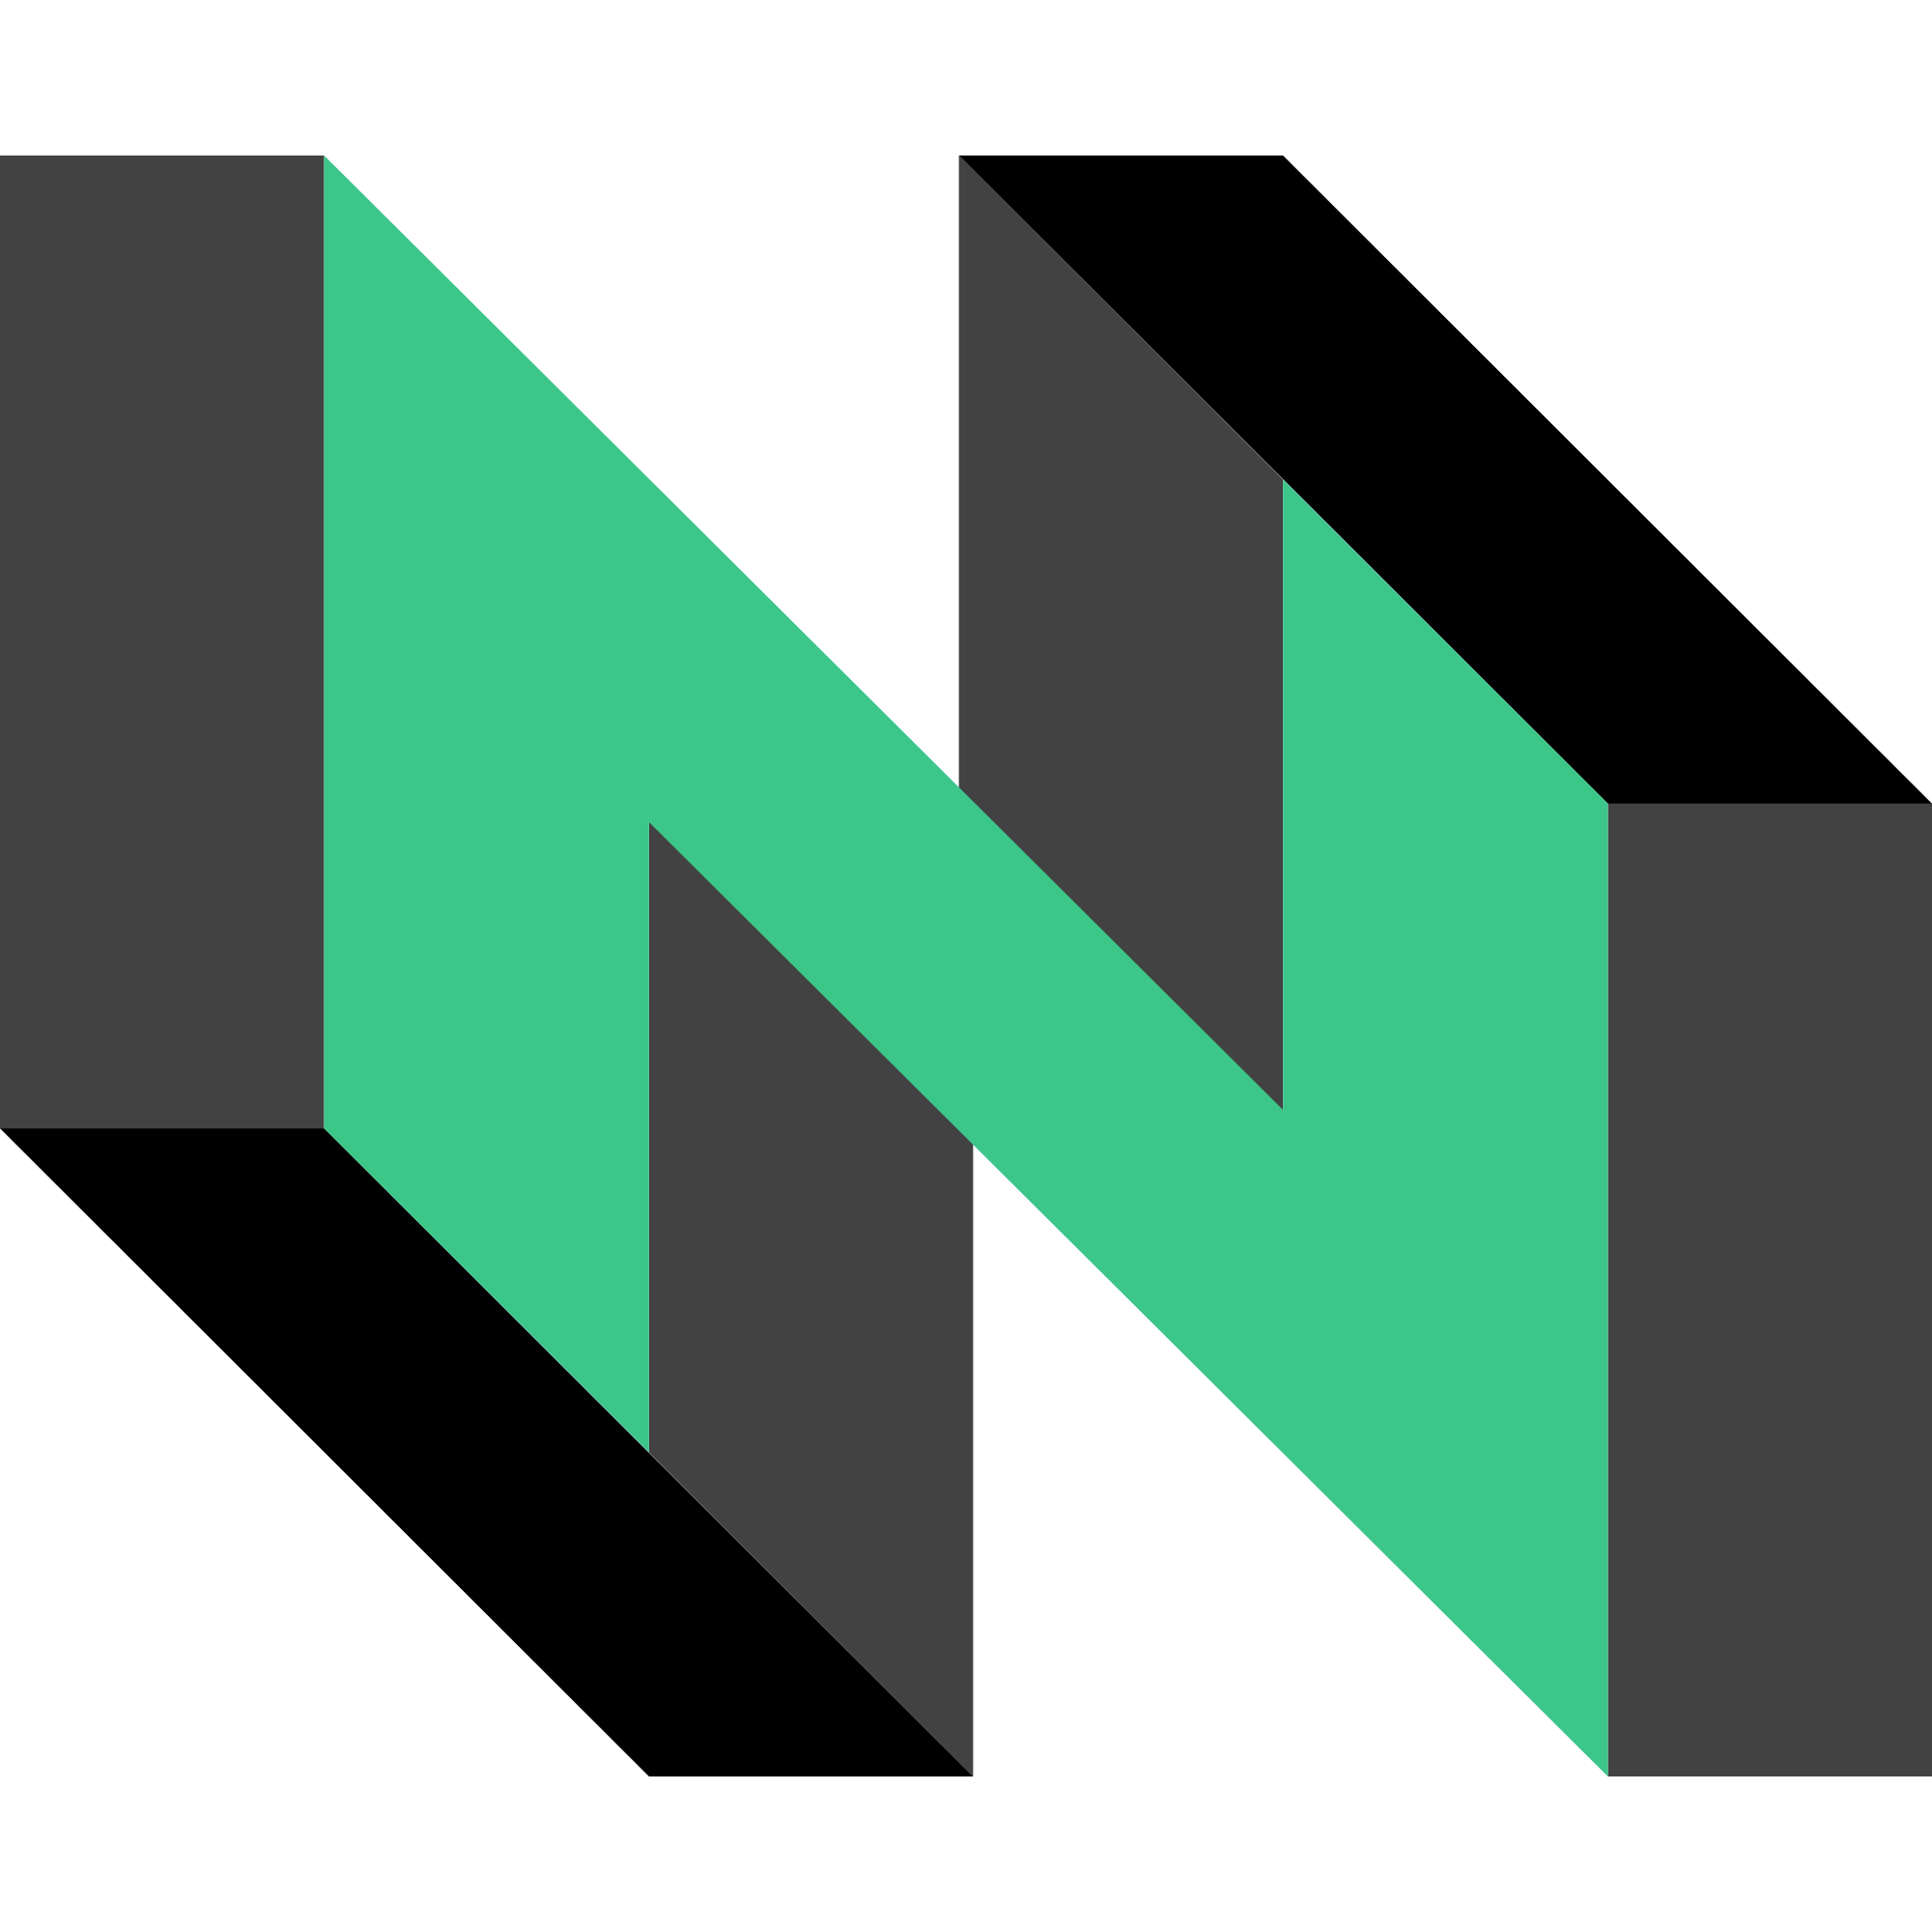 nervos-network-ckb-logo